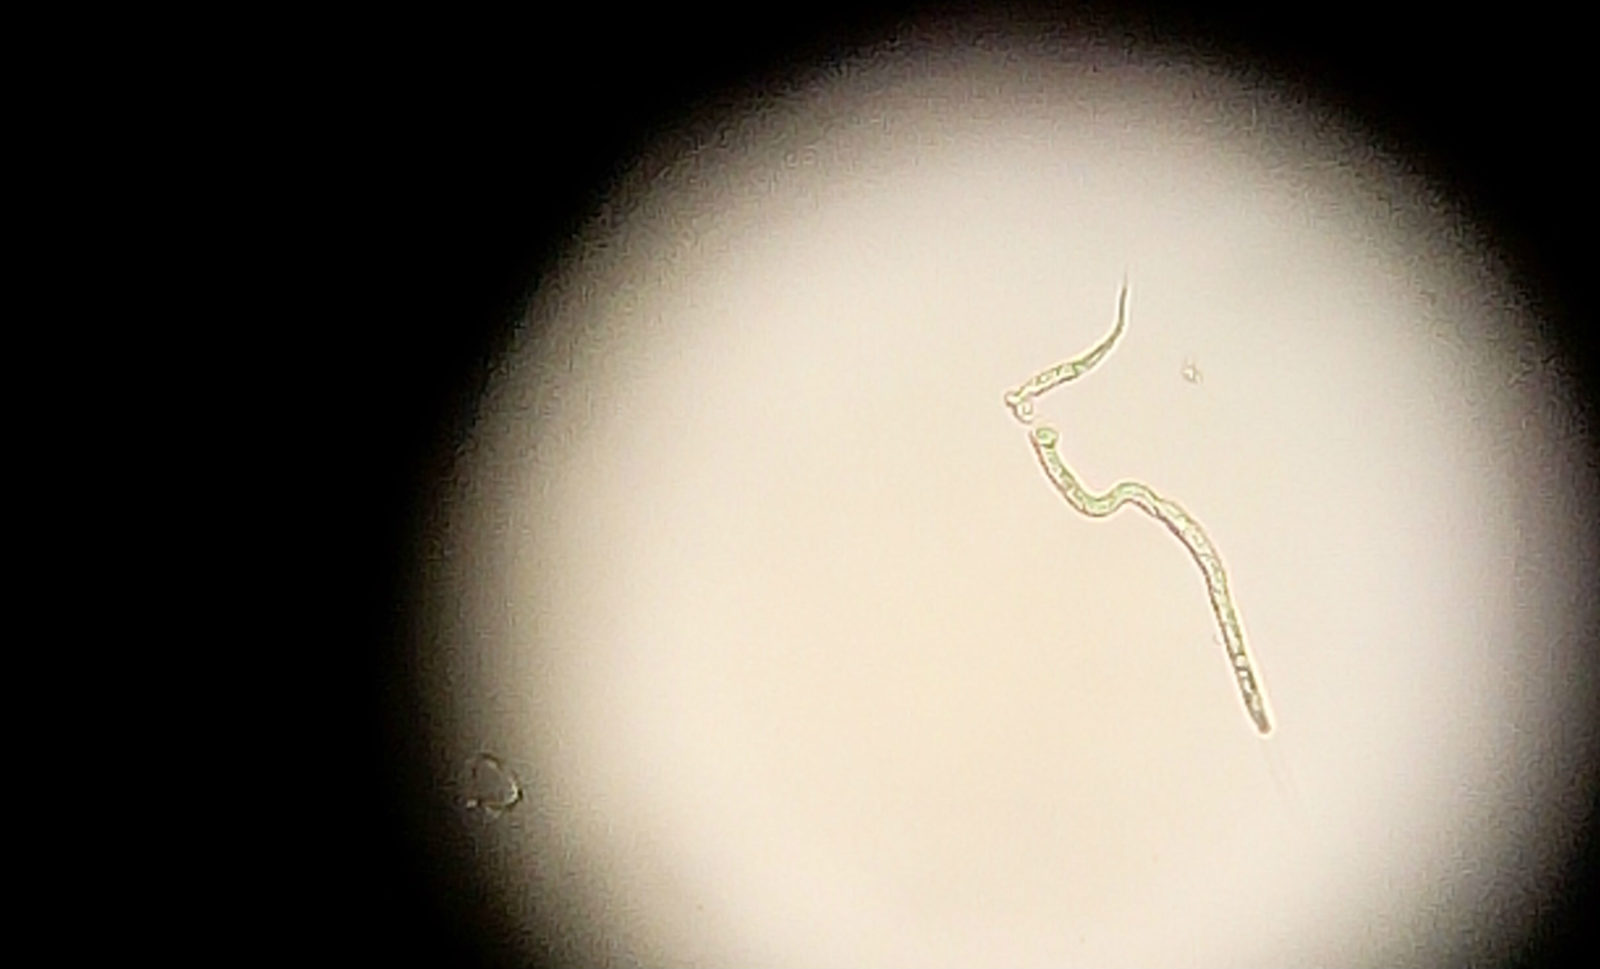 Microscopic parasite